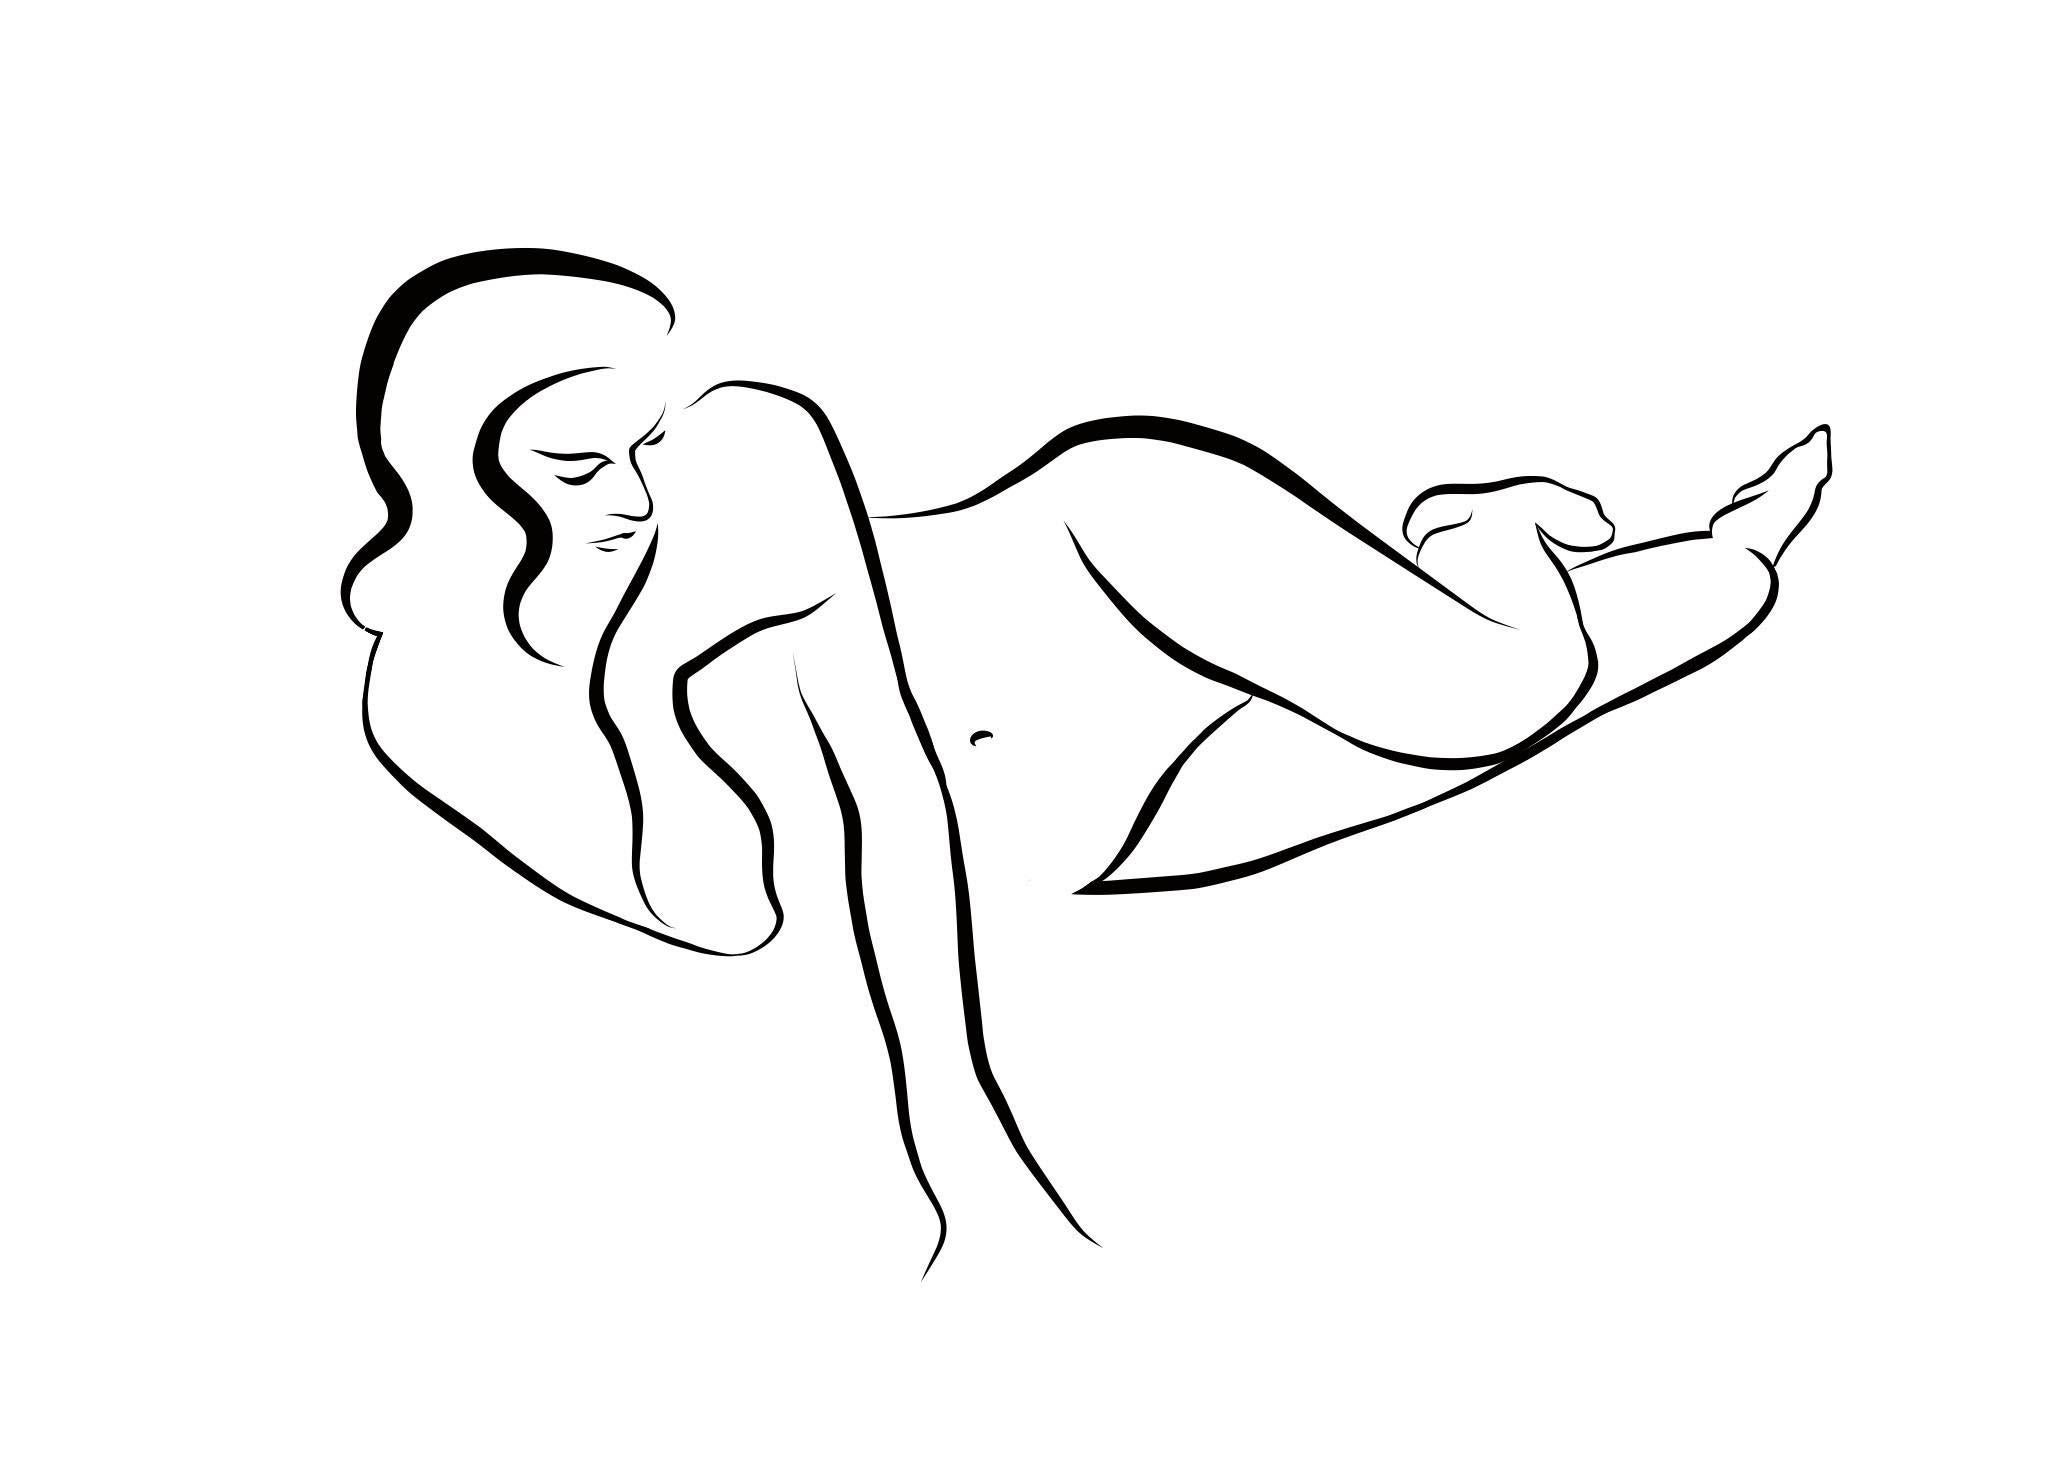 Michael Binkley Nude Print - Haiku #38 - Digital Vector Drawing Reclining Female Nude Woman Figure Relaxed